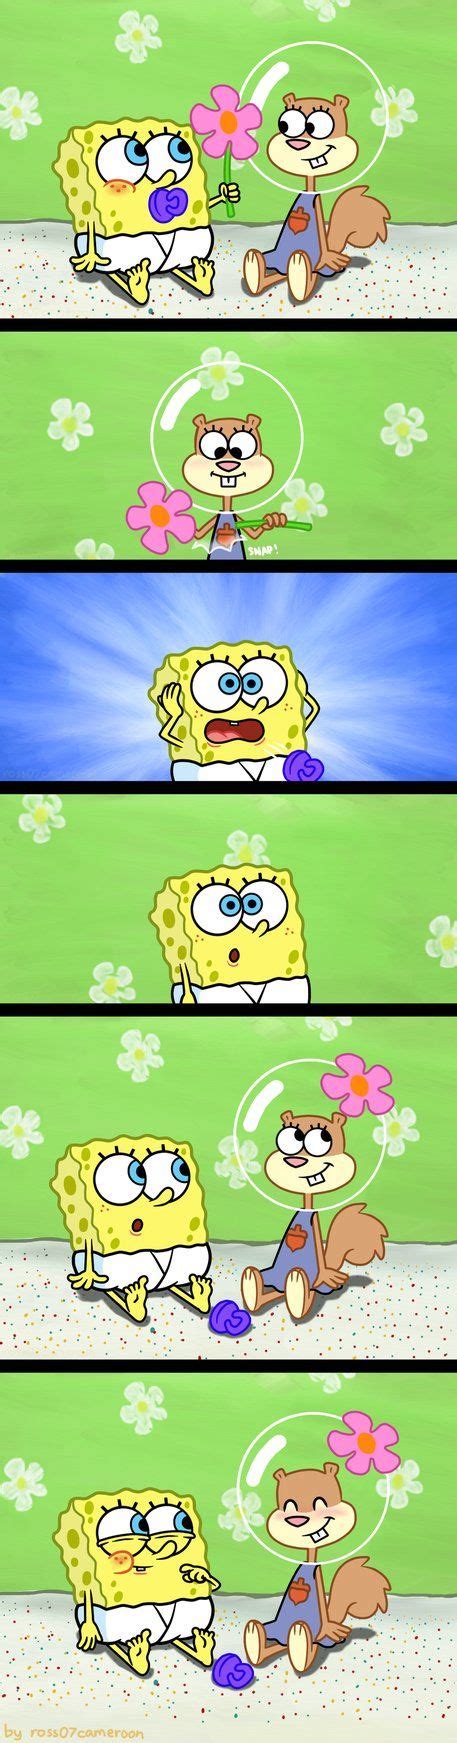 spongebob wallpaper cartoon wallpaper iphone disney wallpaper memes spongebob spongebob